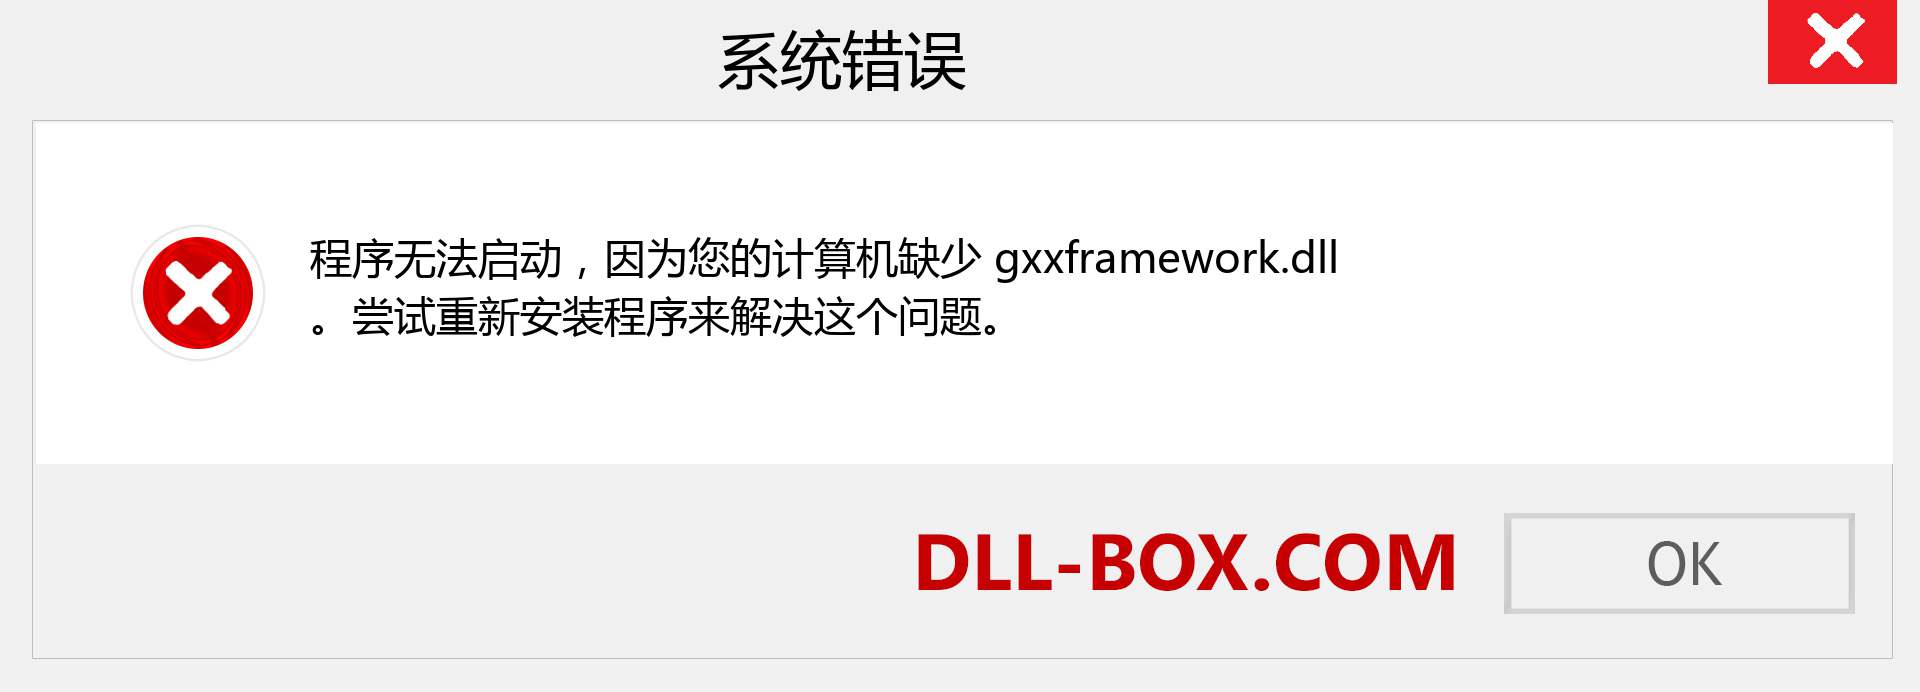 gxxframework.dll 文件丢失？。 适用于 Windows 7、8、10 的下载 - 修复 Windows、照片、图像上的 gxxframework dll 丢失错误